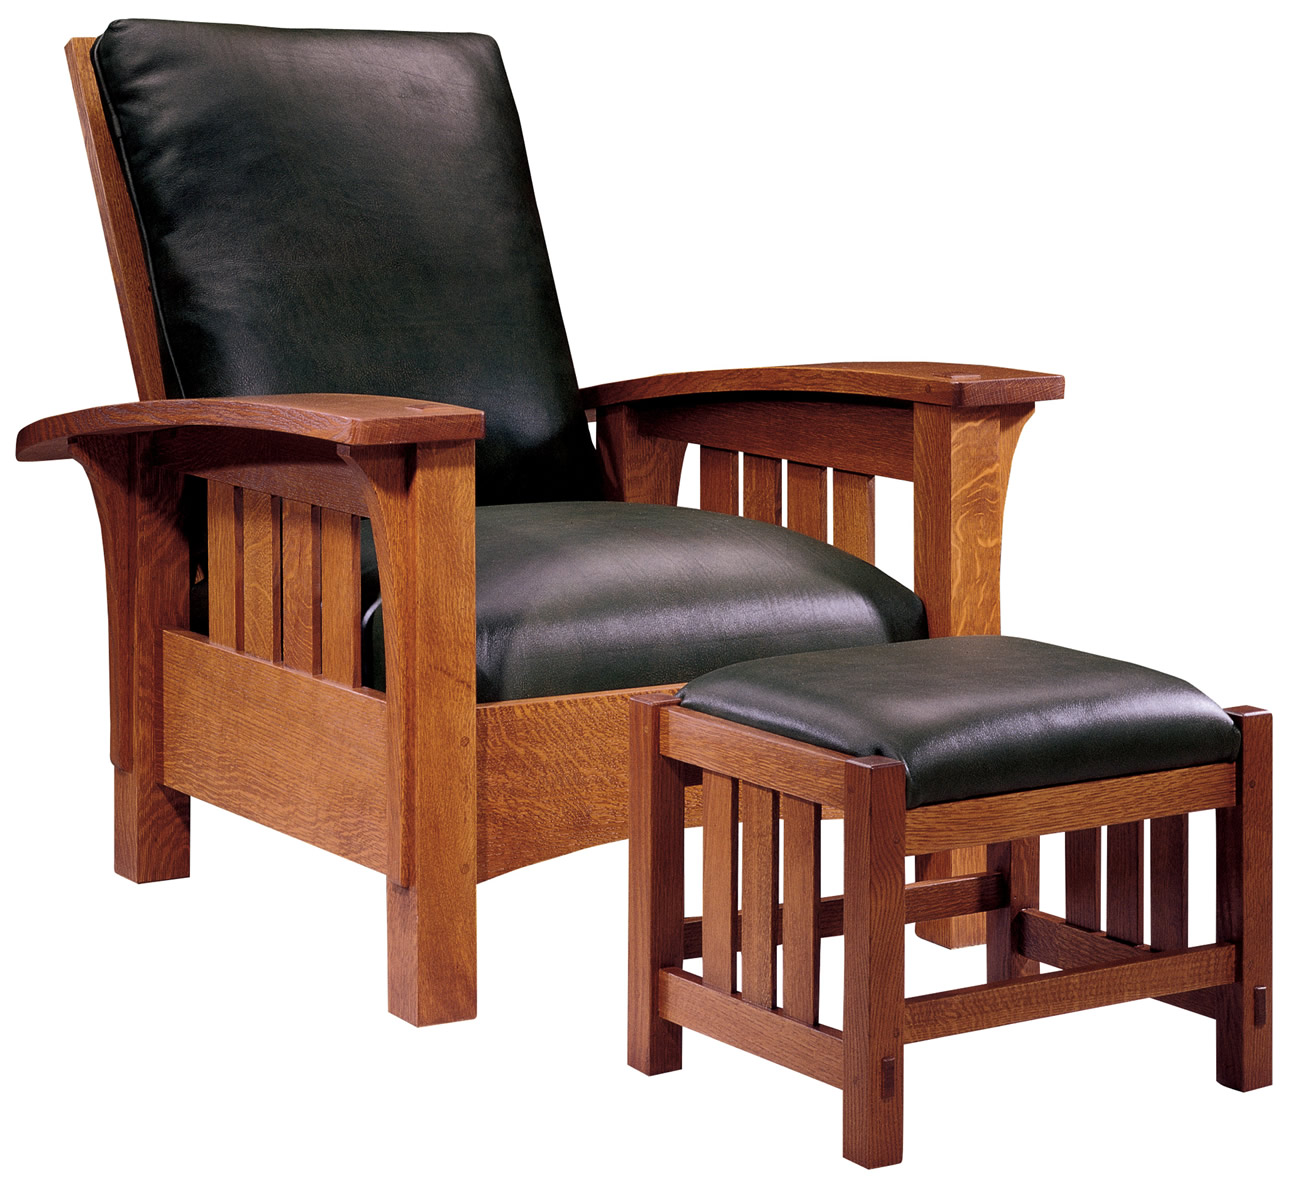 bow arm morris chair. image ... ERFWEGX